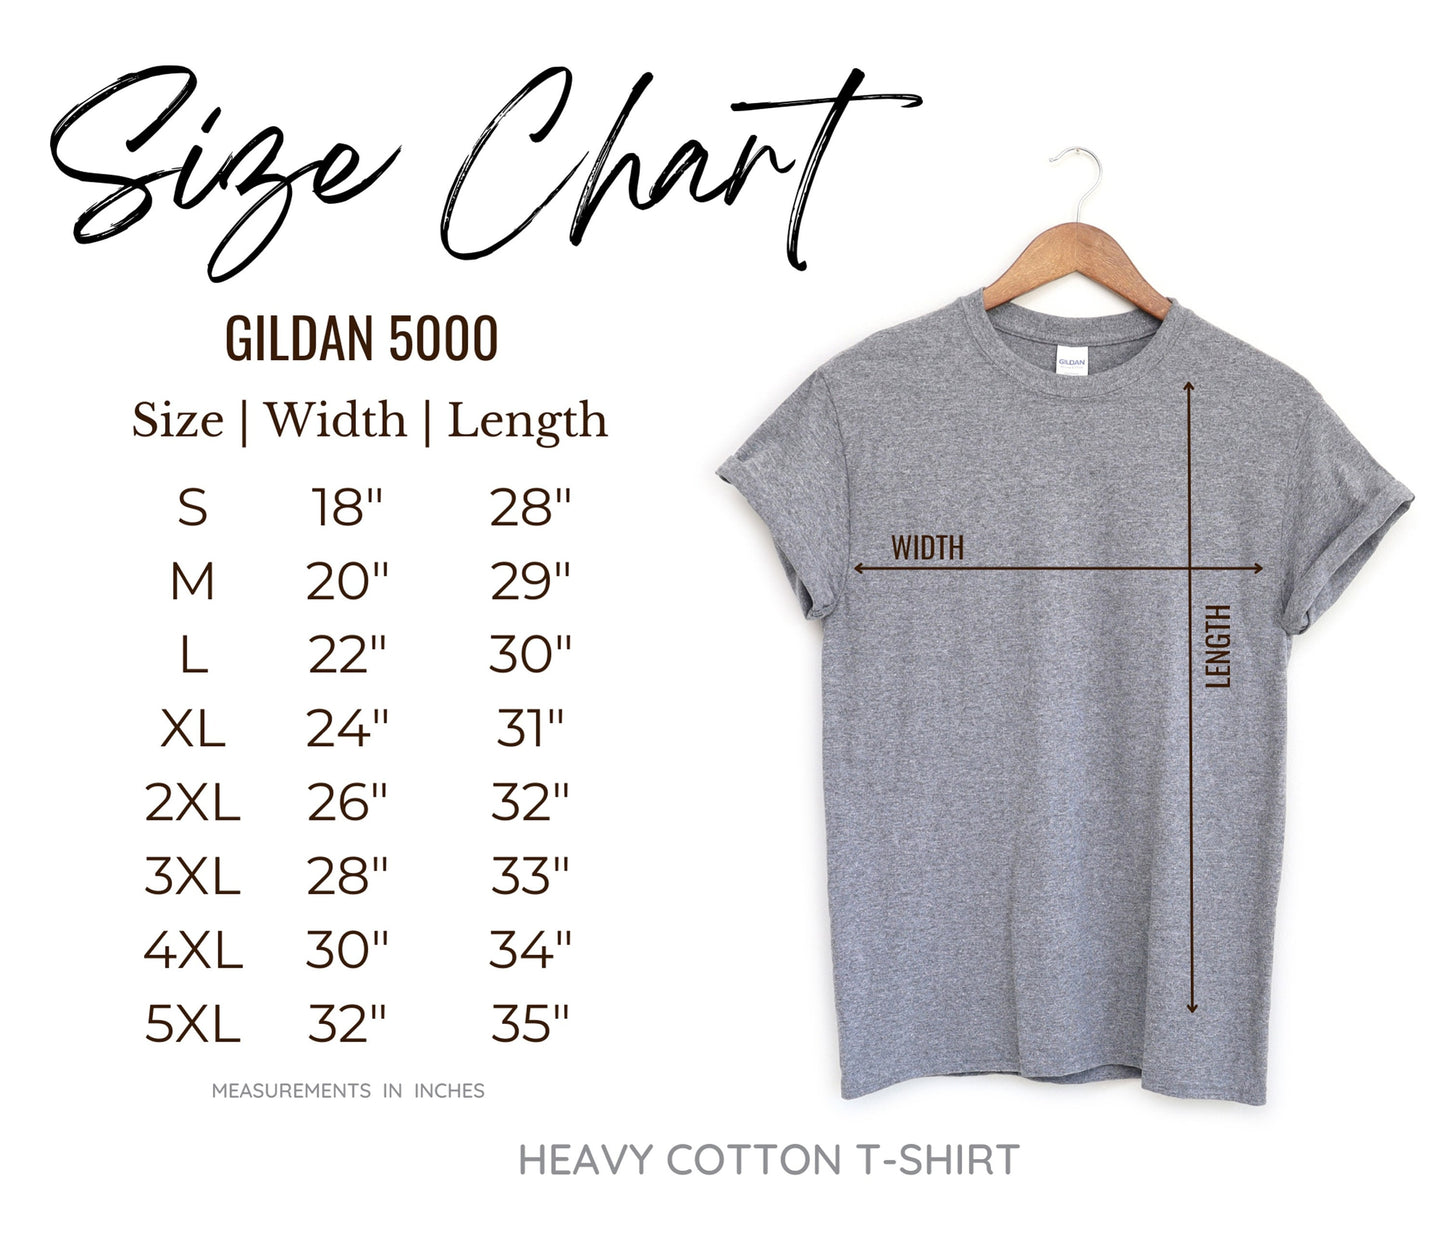 You've Yee'd your last haw Bear Shirt Graphic Shirt Adult Vintage Funny Shirt Nostalgia Cotton Shirt Minimalist Shirt